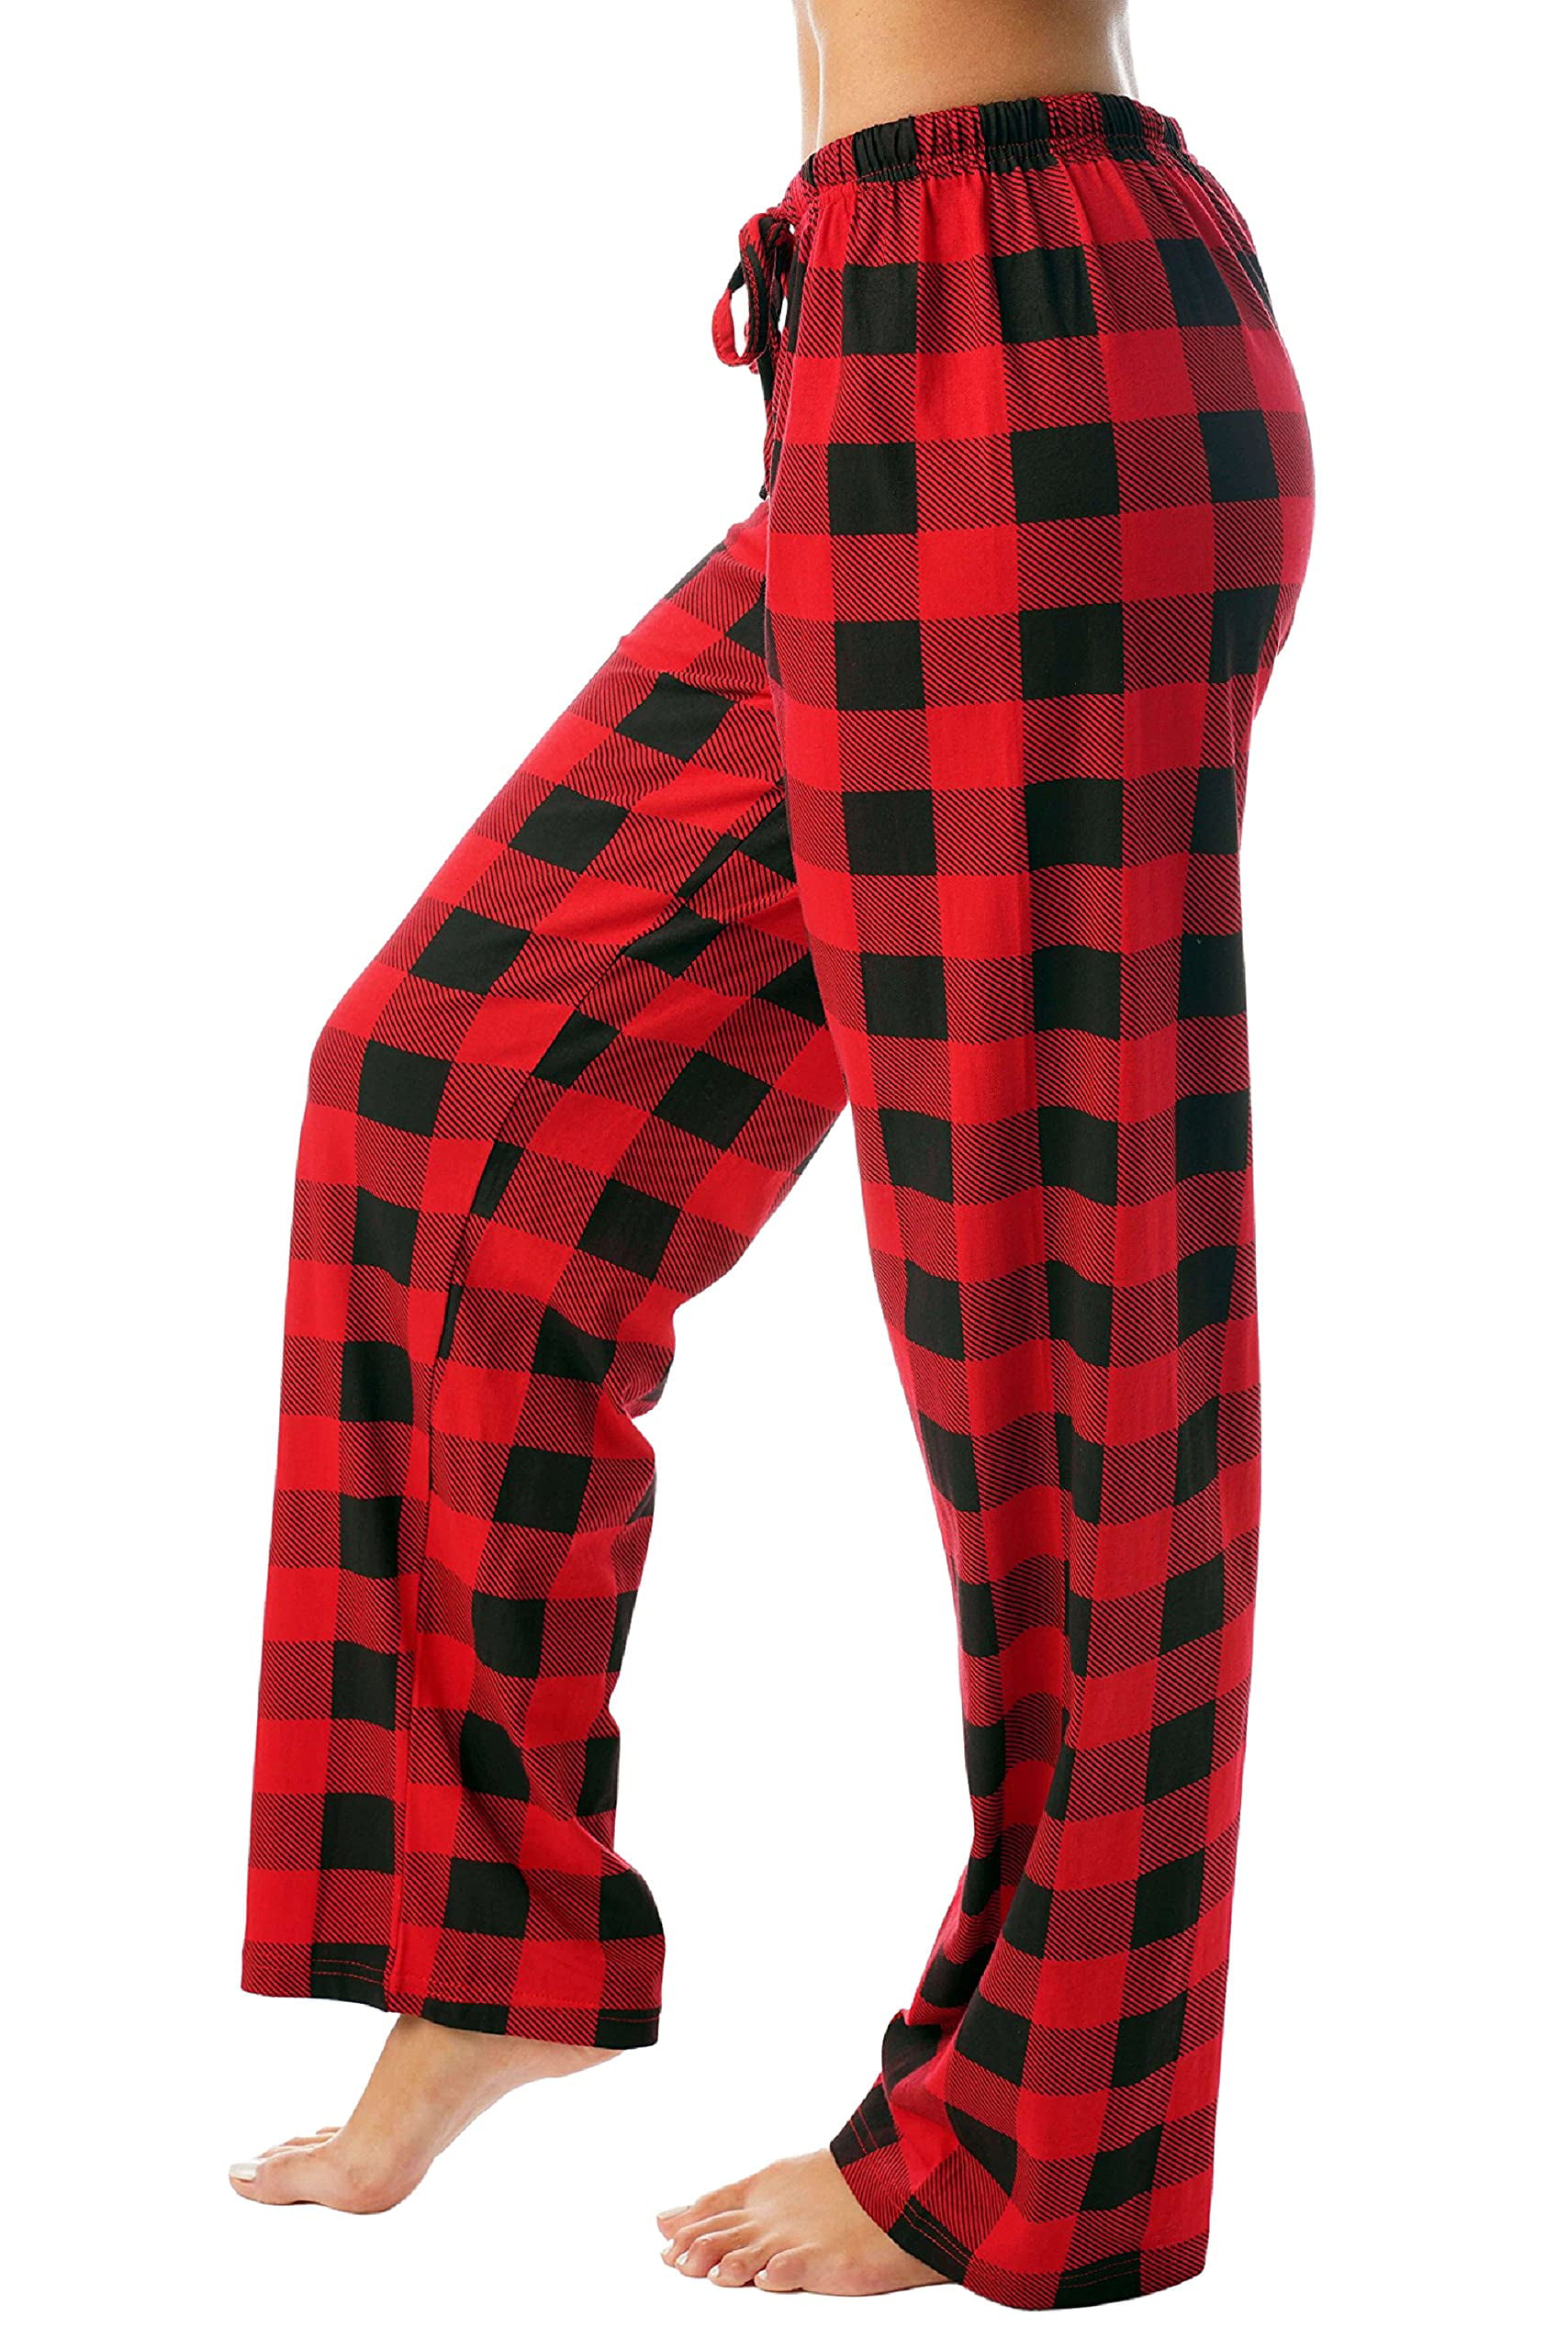 Just Love Women Buffalo Plaid Pajama Pants Sleepwear (Red Black Buffalo  Plaid, 2X)